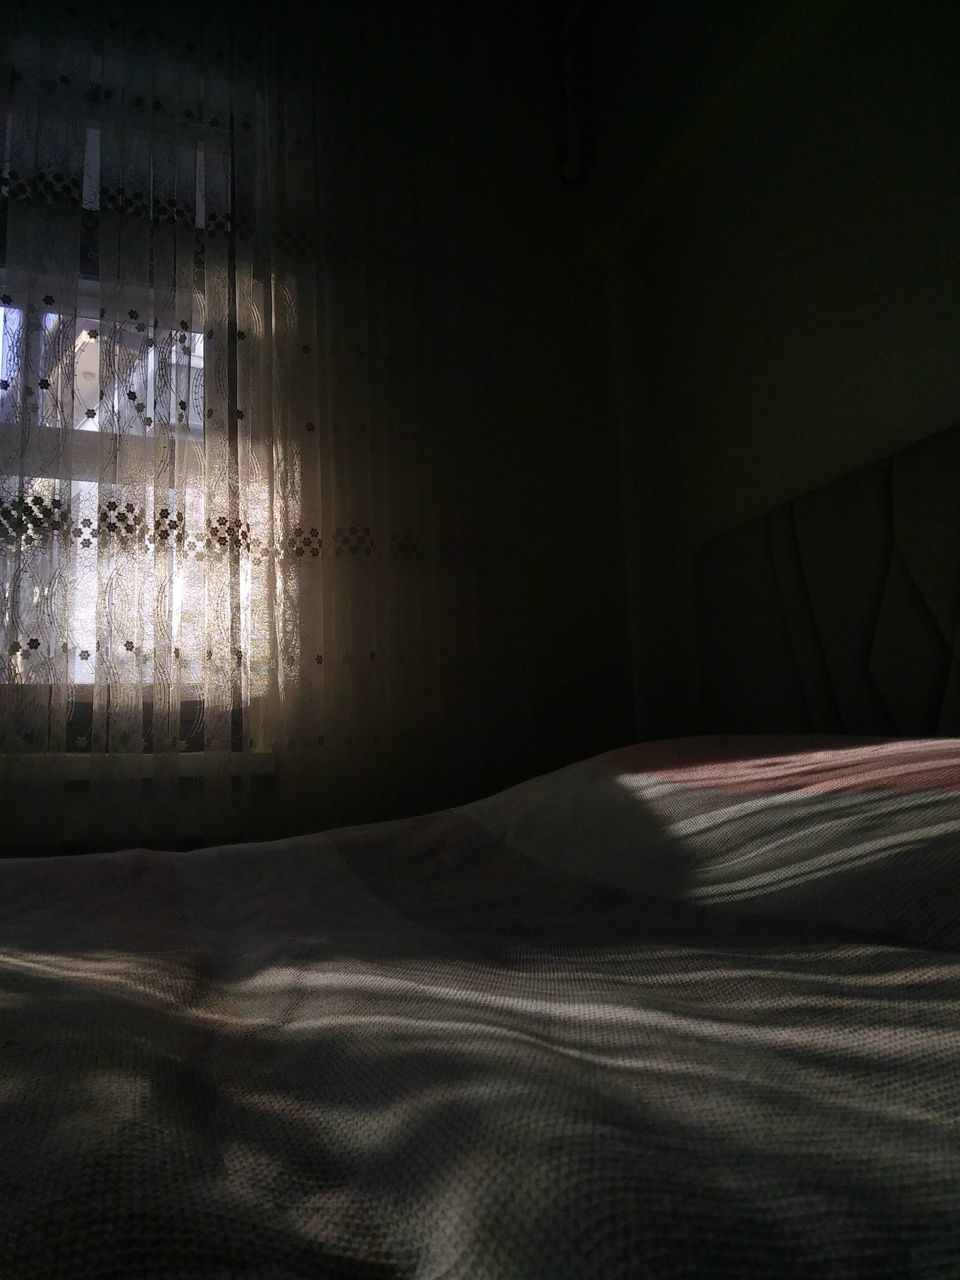 SUNLIGHT FALLING ON BED